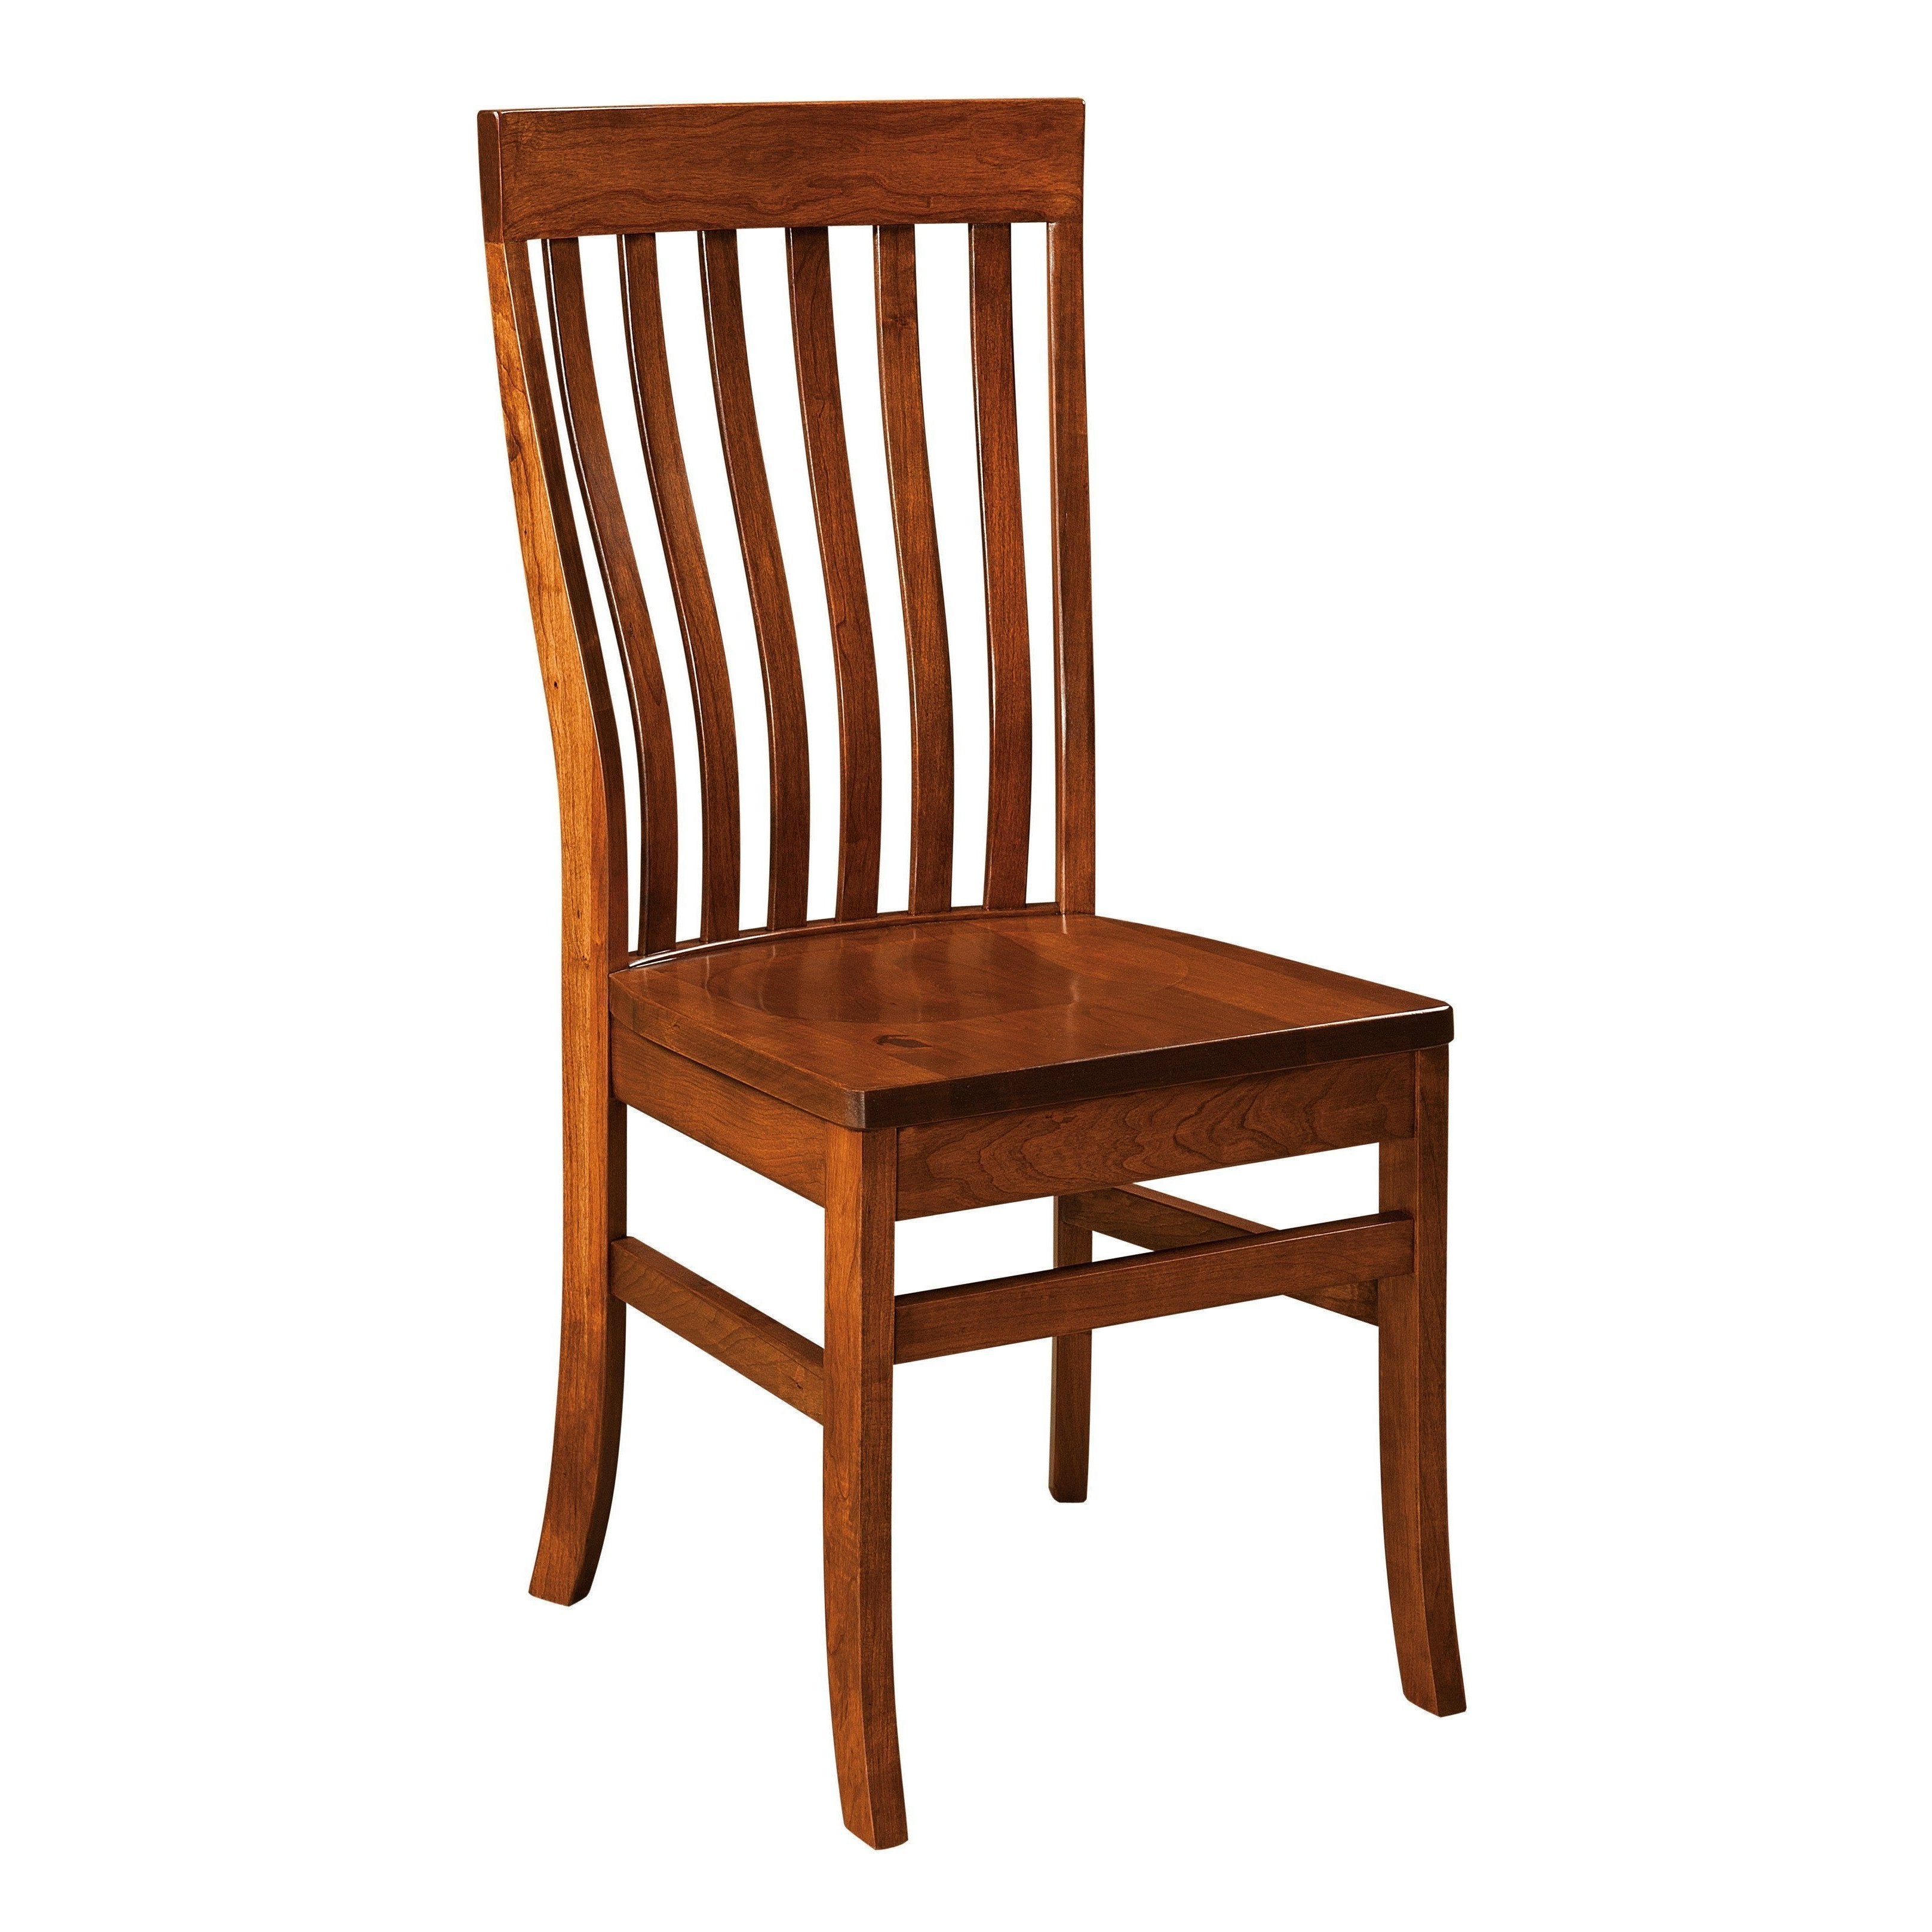 theodore-side-chair-260327.jpg